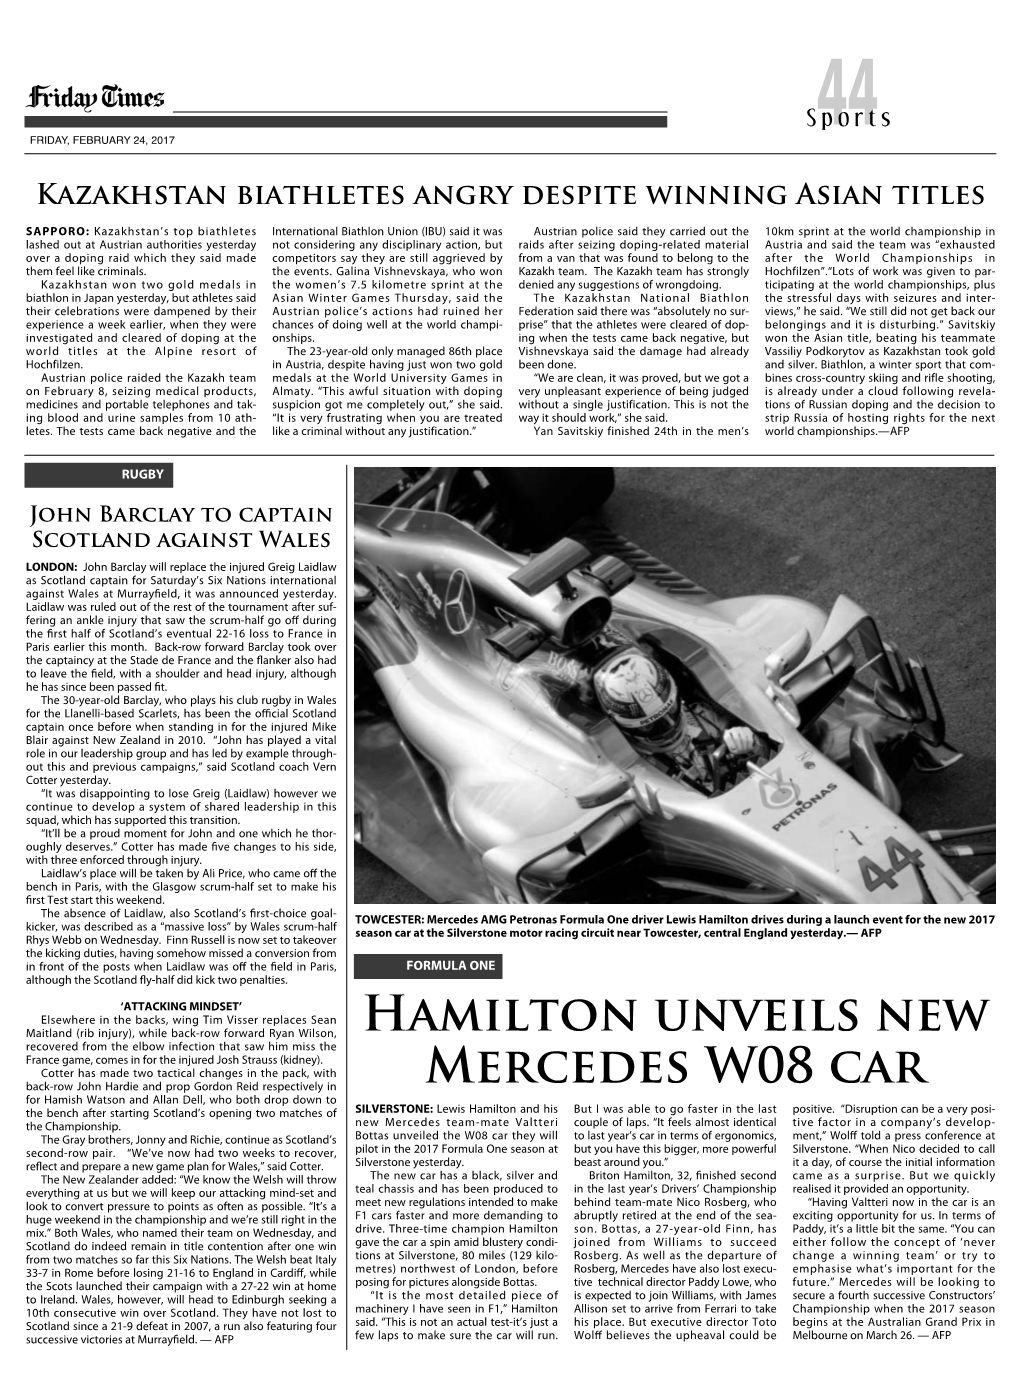 Hamilton Unveils New Mercedes W08